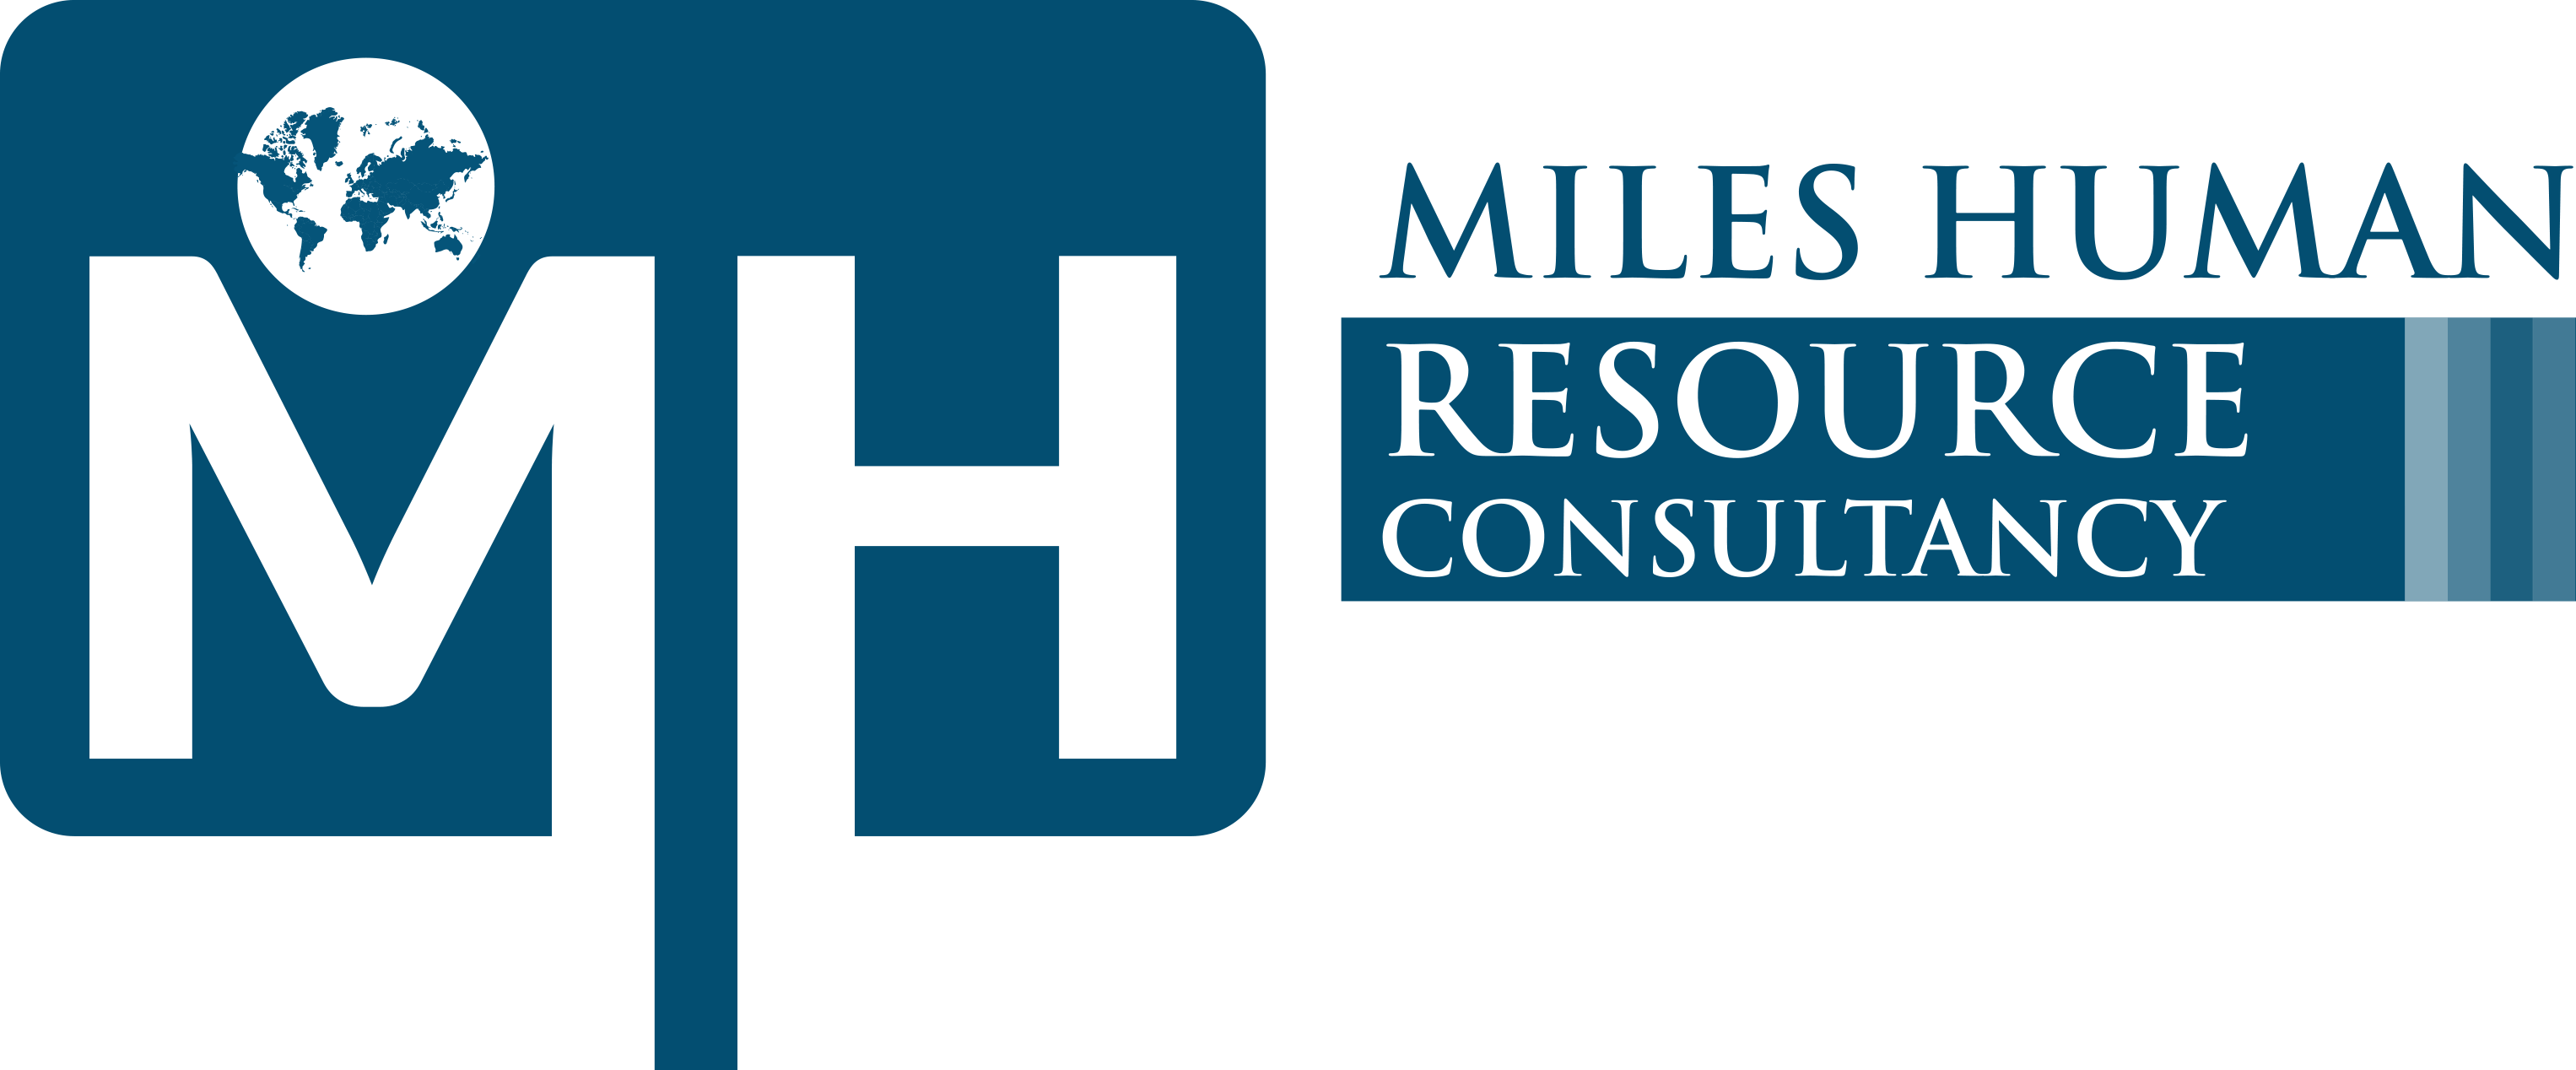 Miles Human Resource Consultancy